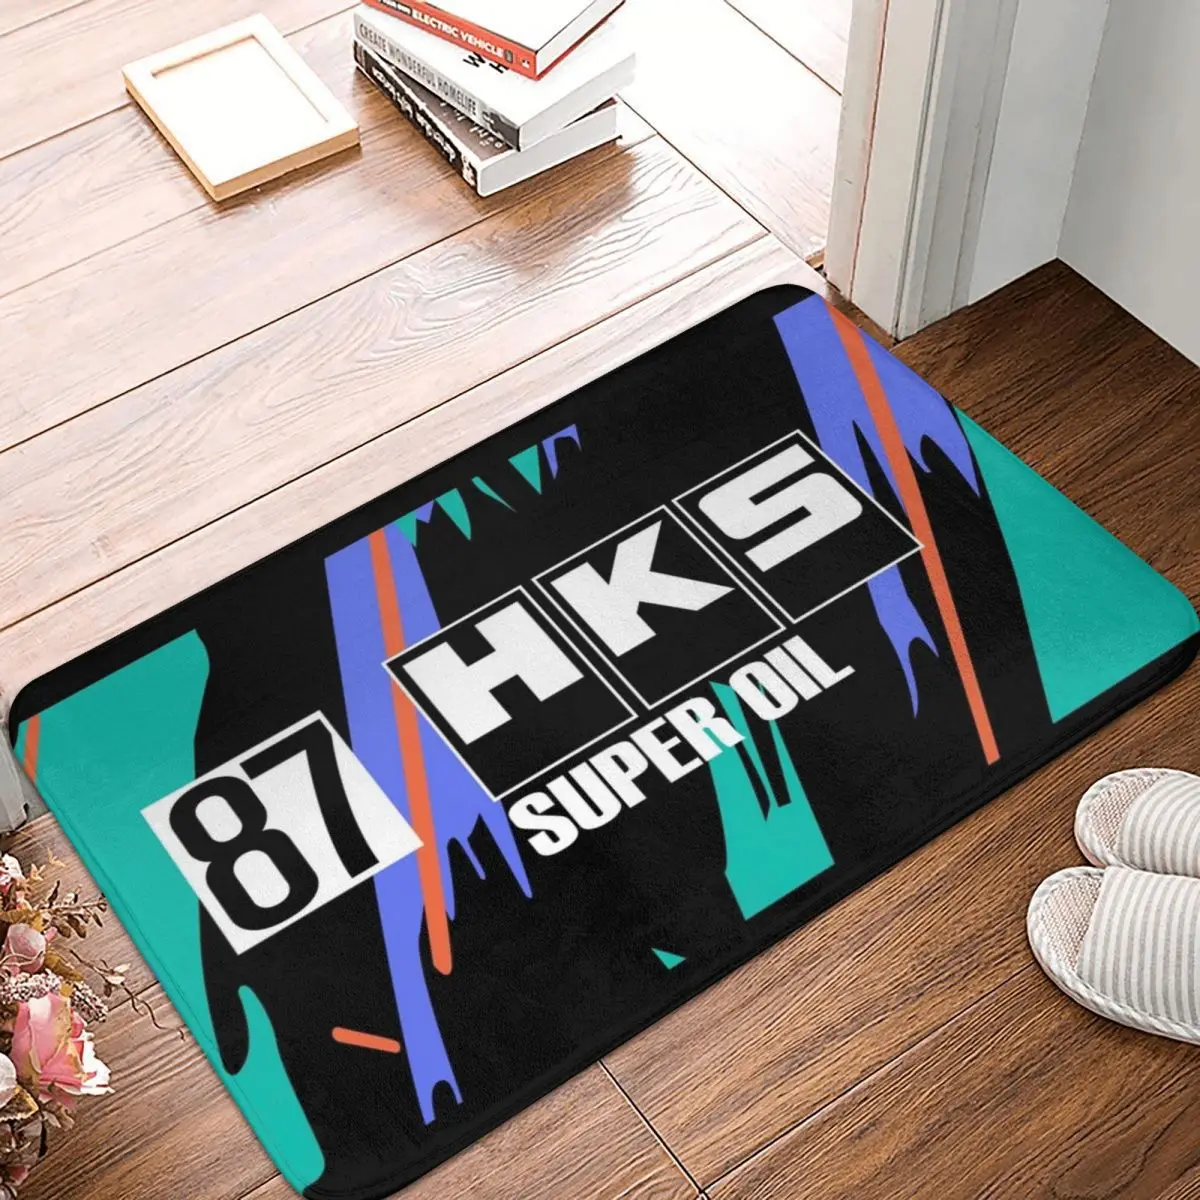 

HKS R32 GT-R Doormat Rug Carpet Mat Footpad Polyester Non-slip Water Oil ProofEntrance Kitchen Bedroom Balcony Cartoon